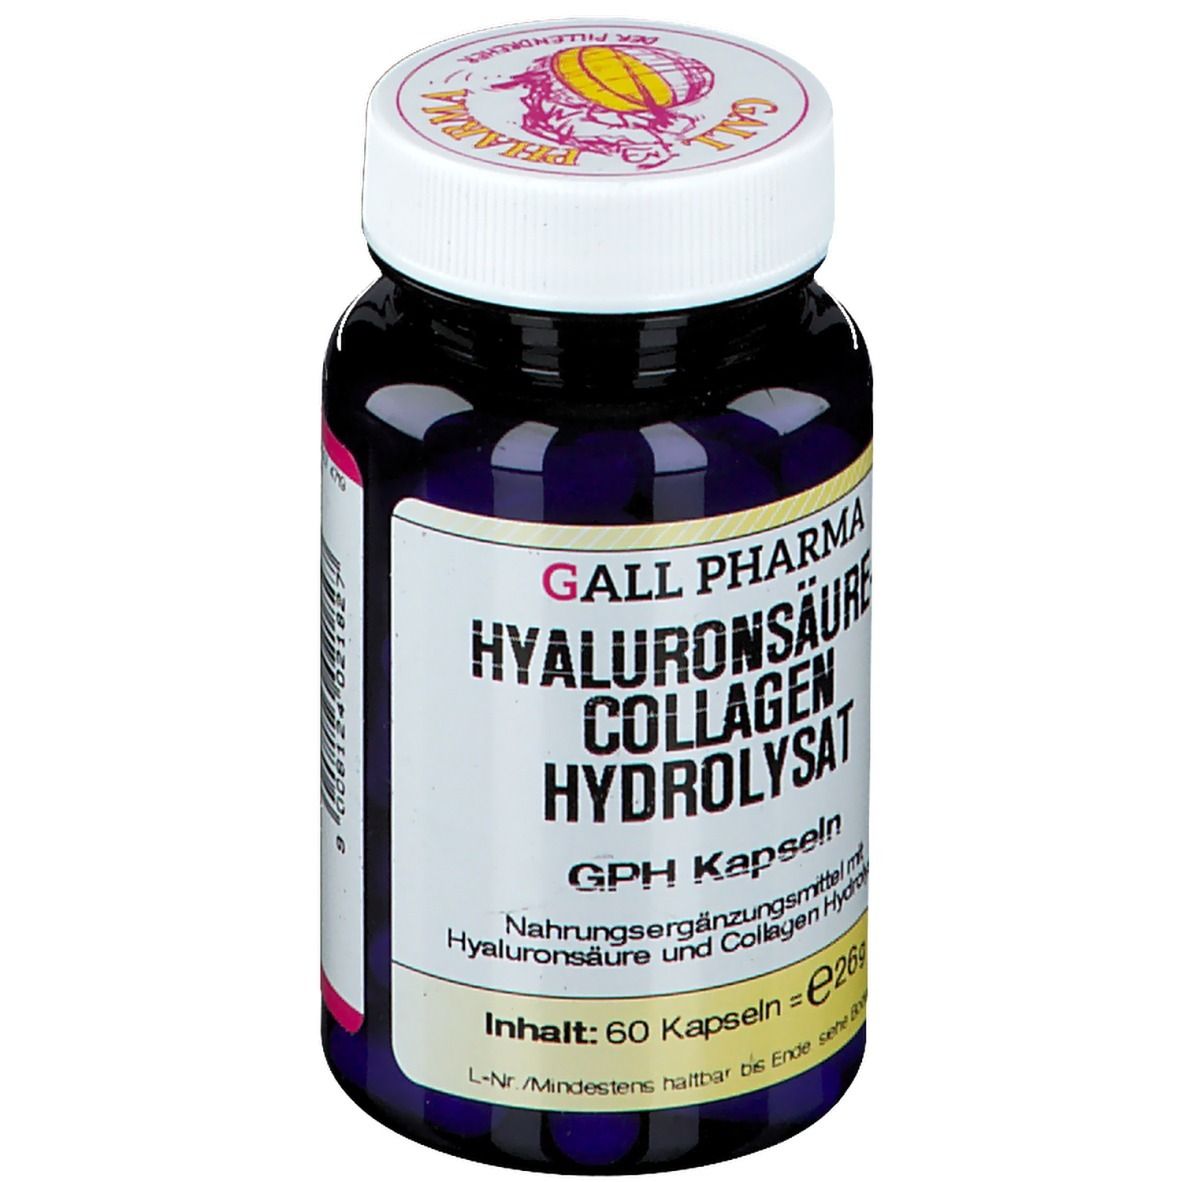 GALL PHARMA Hyaluronsäure-Collagen-Hydrolysat GPH